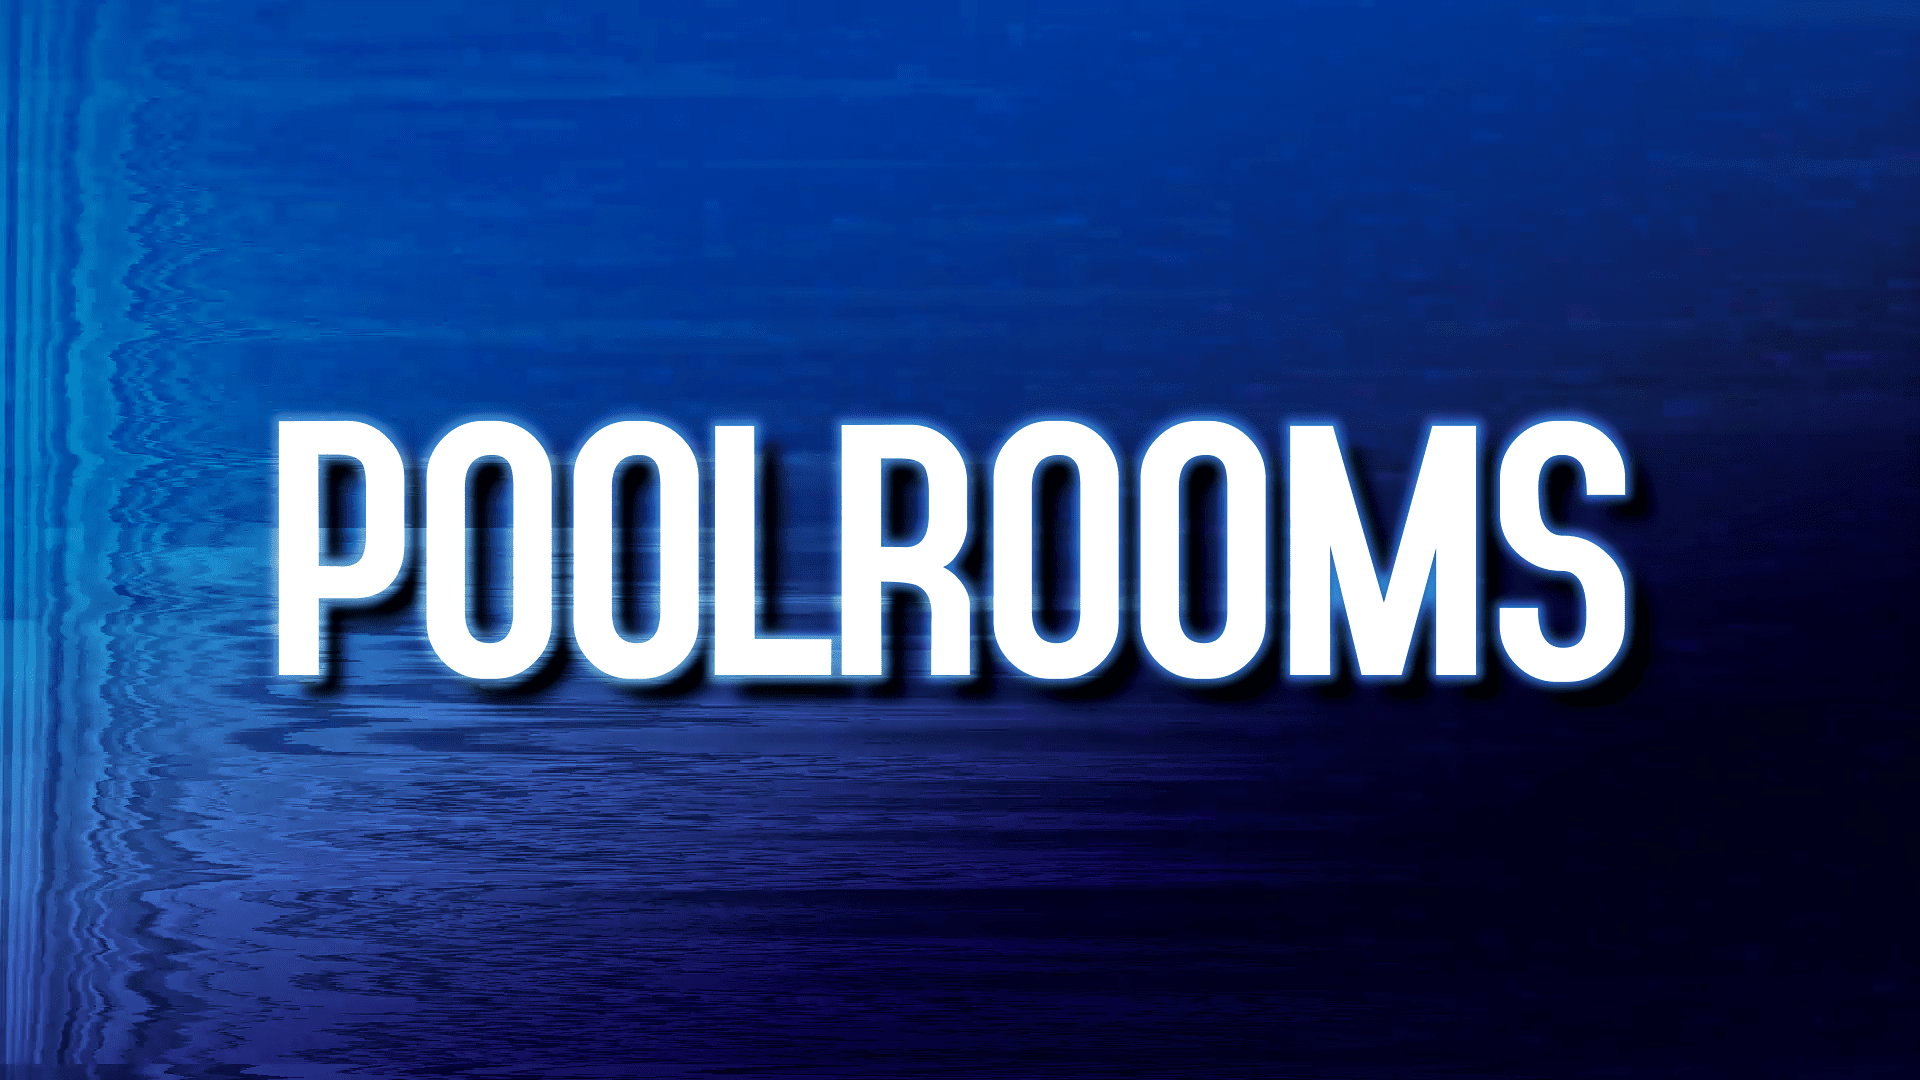 Image 1 - The PoolRooms Experience - Indie DB